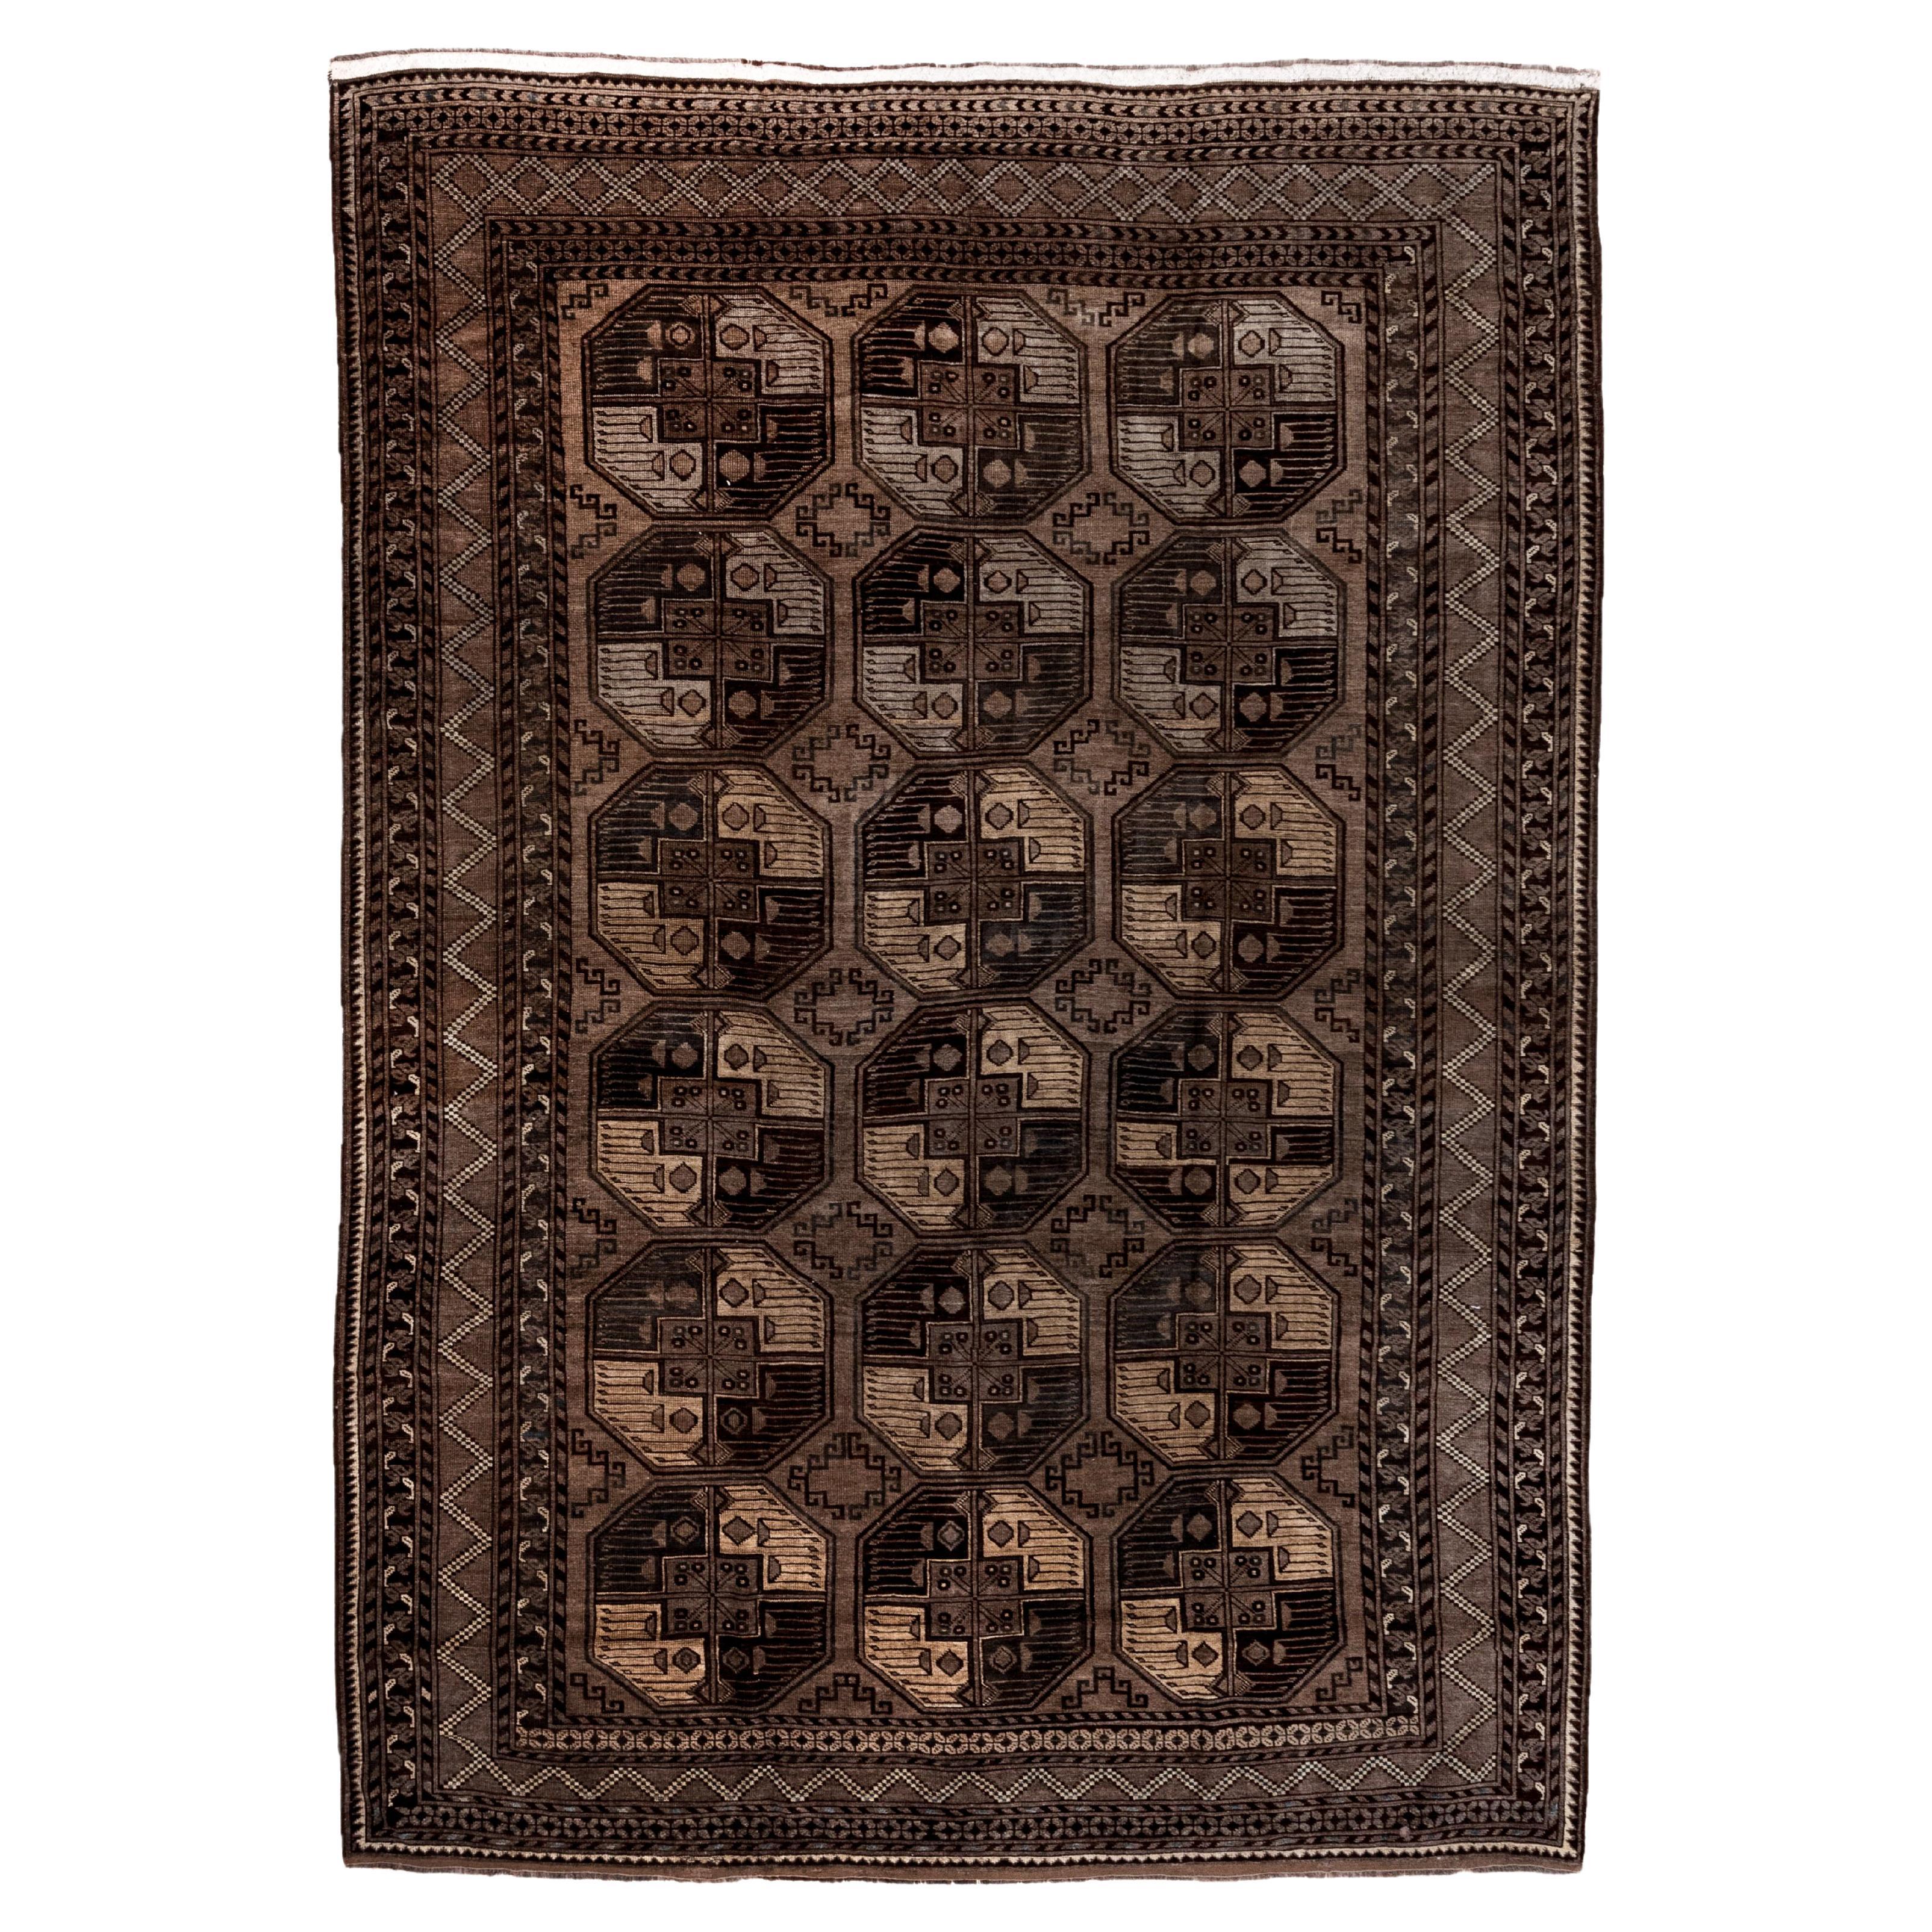 Antique Afghan Ersari Carpet, Turkmen Pattern, Circa 1930s, Brown & Gold Tones For Sale